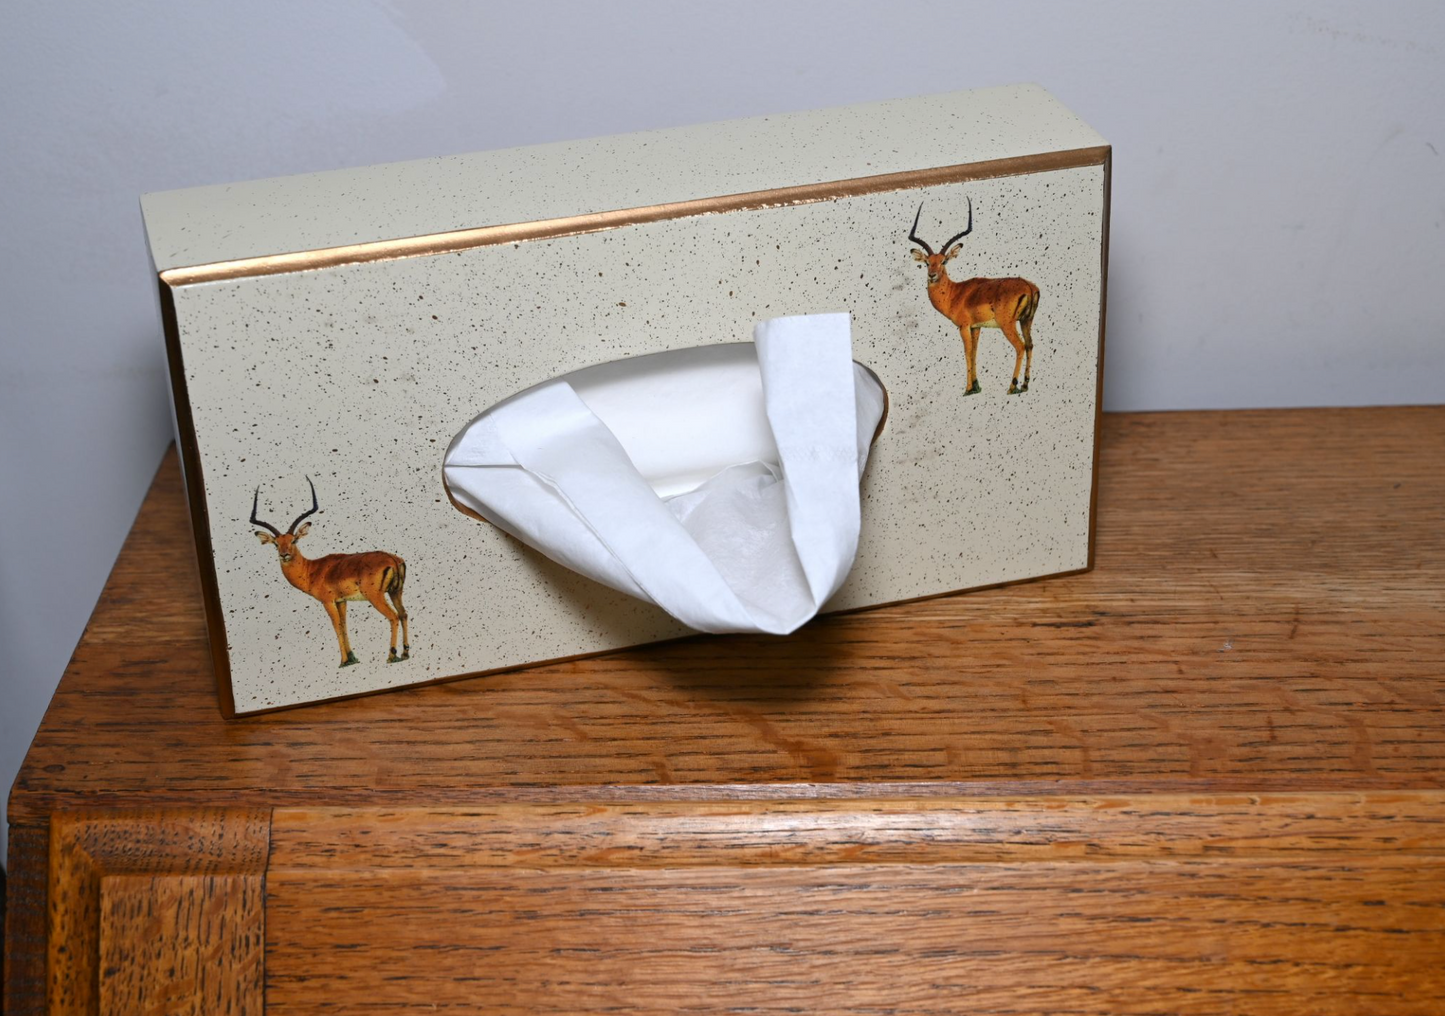 Rectangular Tissue Box Cover: Impala